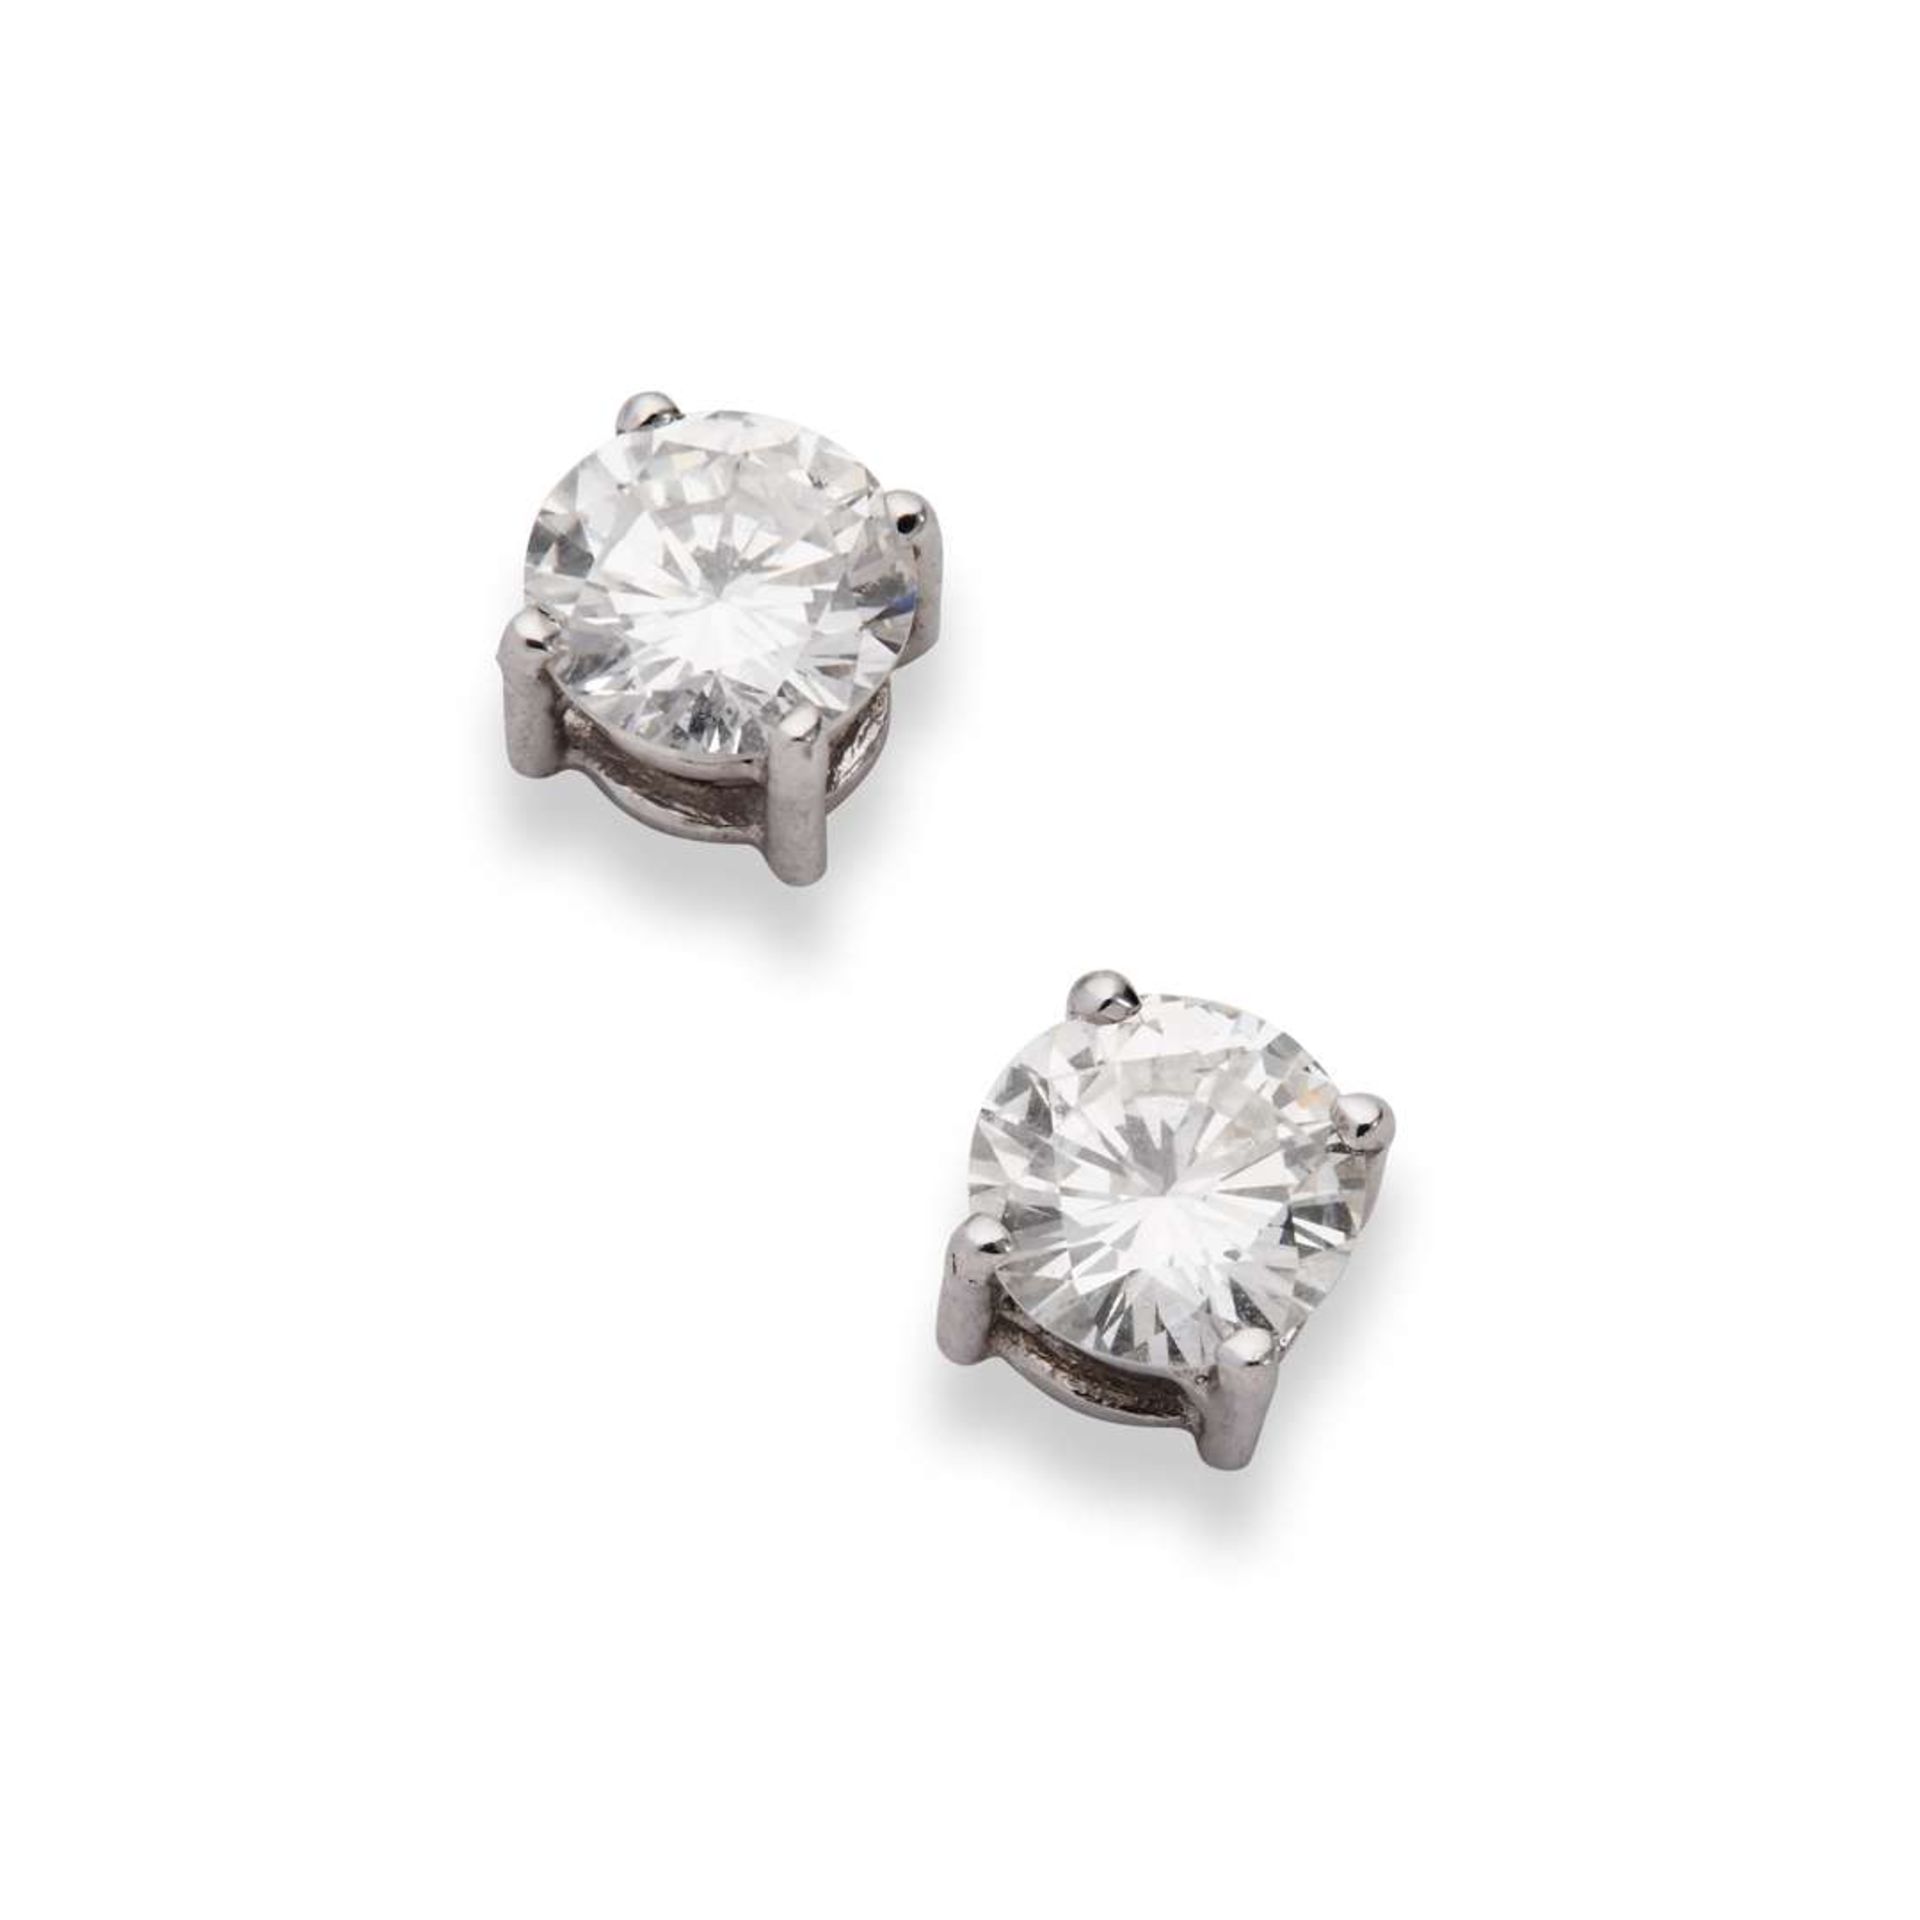 A pair of 18ct gold diamond stud earrings